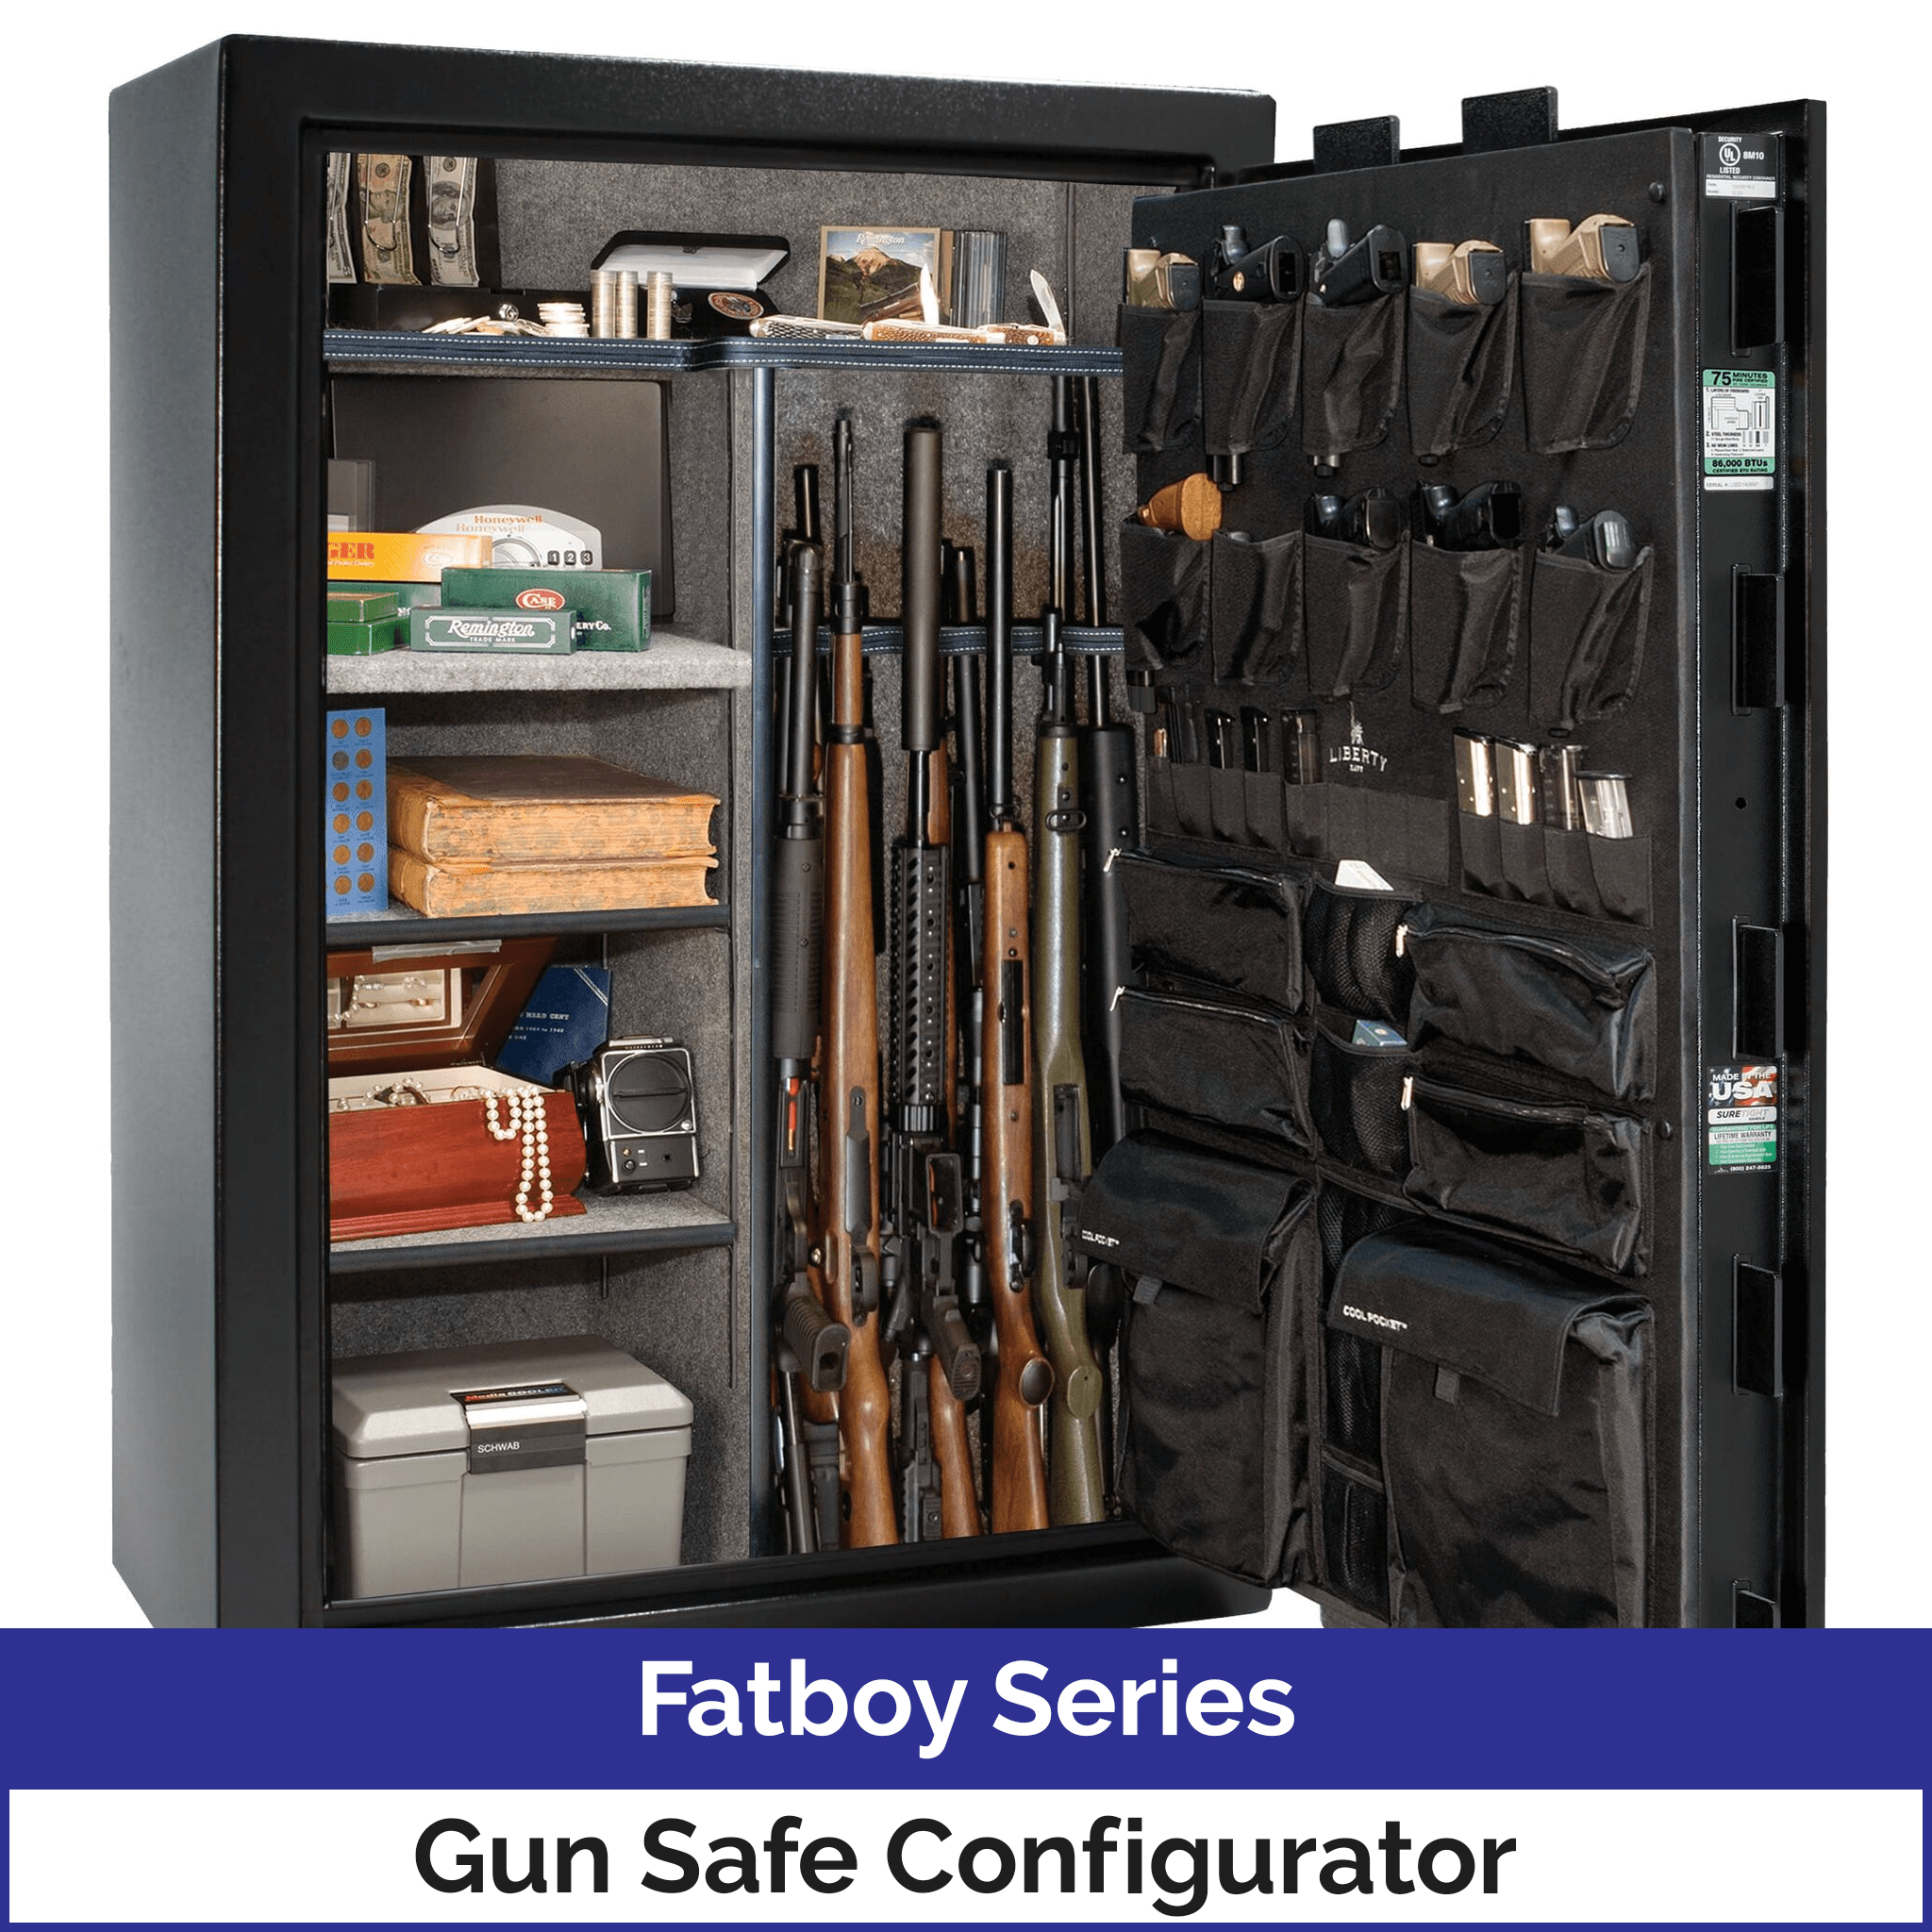 Liberty Fatboy Series Gun Safe Configurator, image 2 